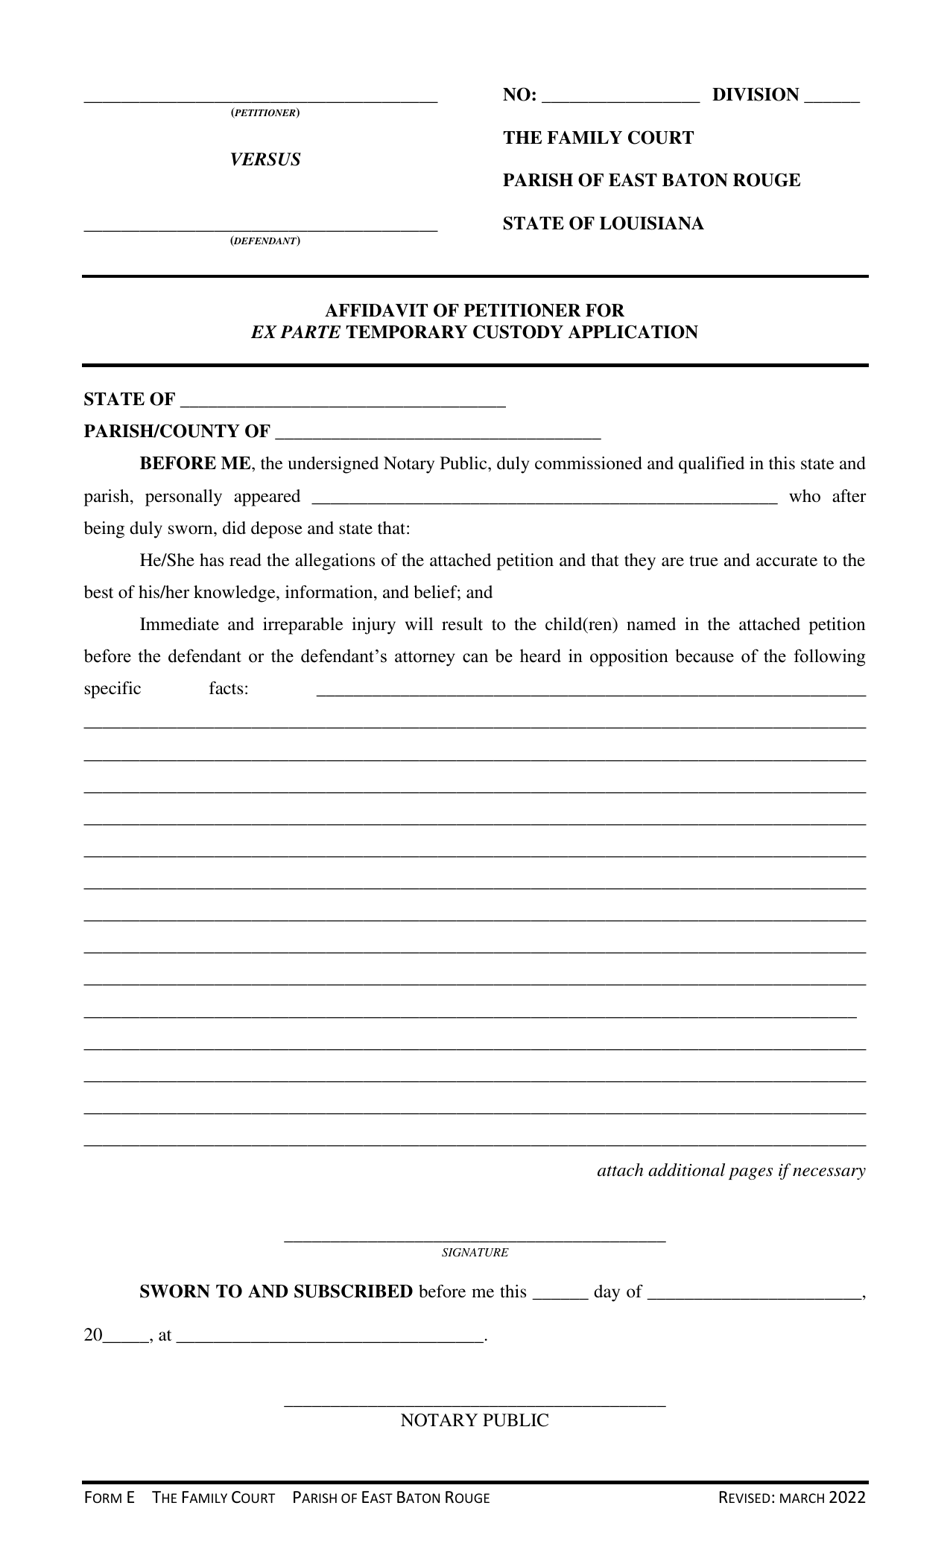 Form E Affidavit of Petitioner for Ex Parte Temporary Custody Application - Parish of East Baton Rouge, Louisiana, Page 1